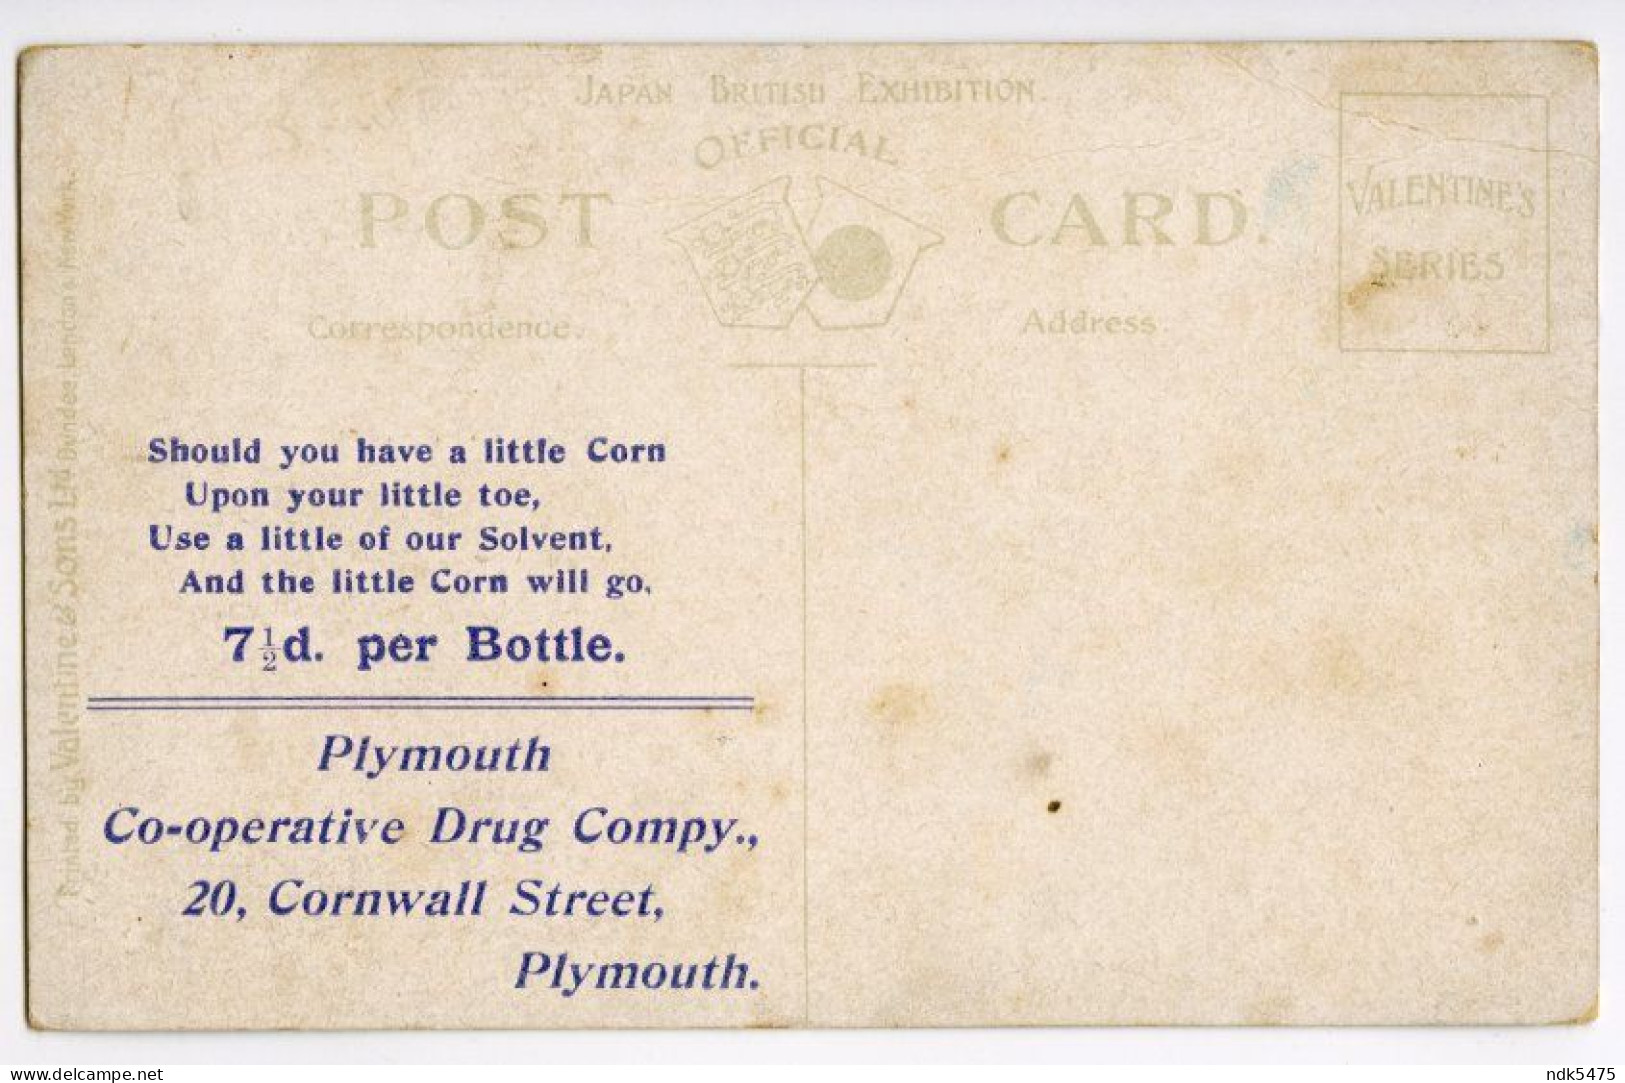 JAPAN-BRITISH EXHIBITION, LONDON,1910 - CASCADE / PLYMOUTH, CO-OPERATIVE DRUG COMPANY, CORNWALL STREET, CORNS - Plymouth